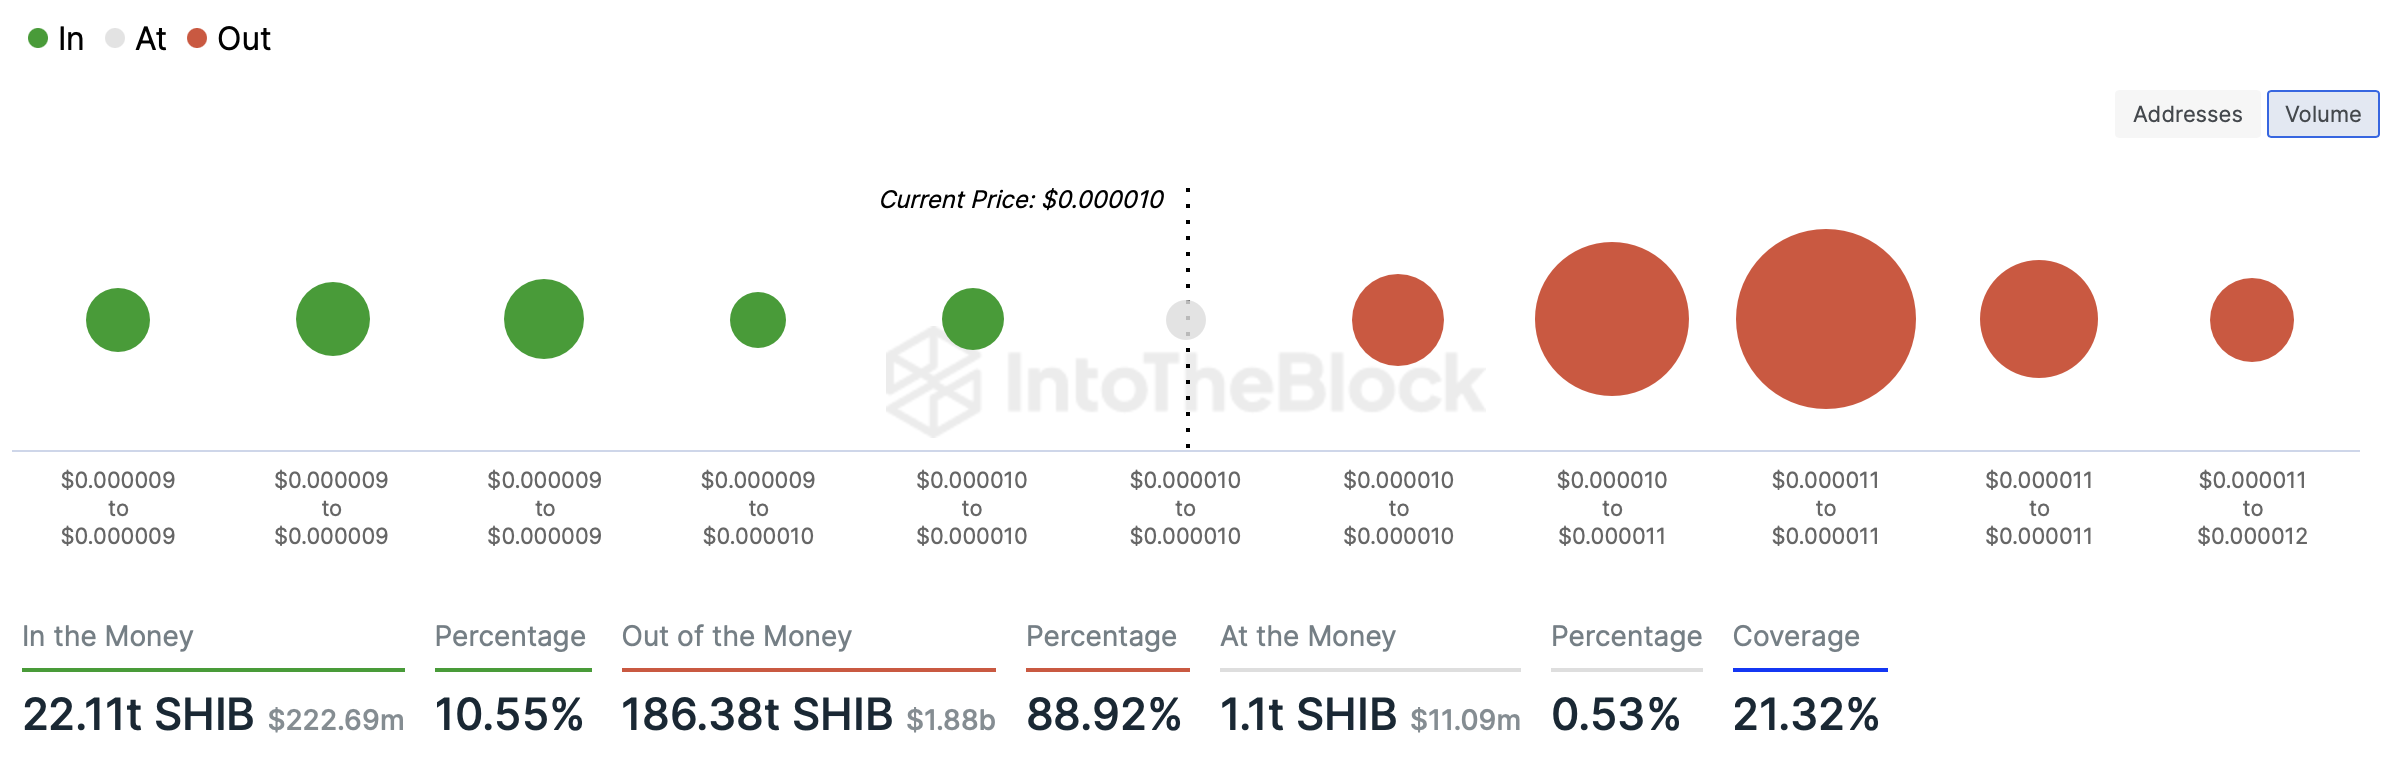 Shiba Inu tokens underwater at $0.00001011